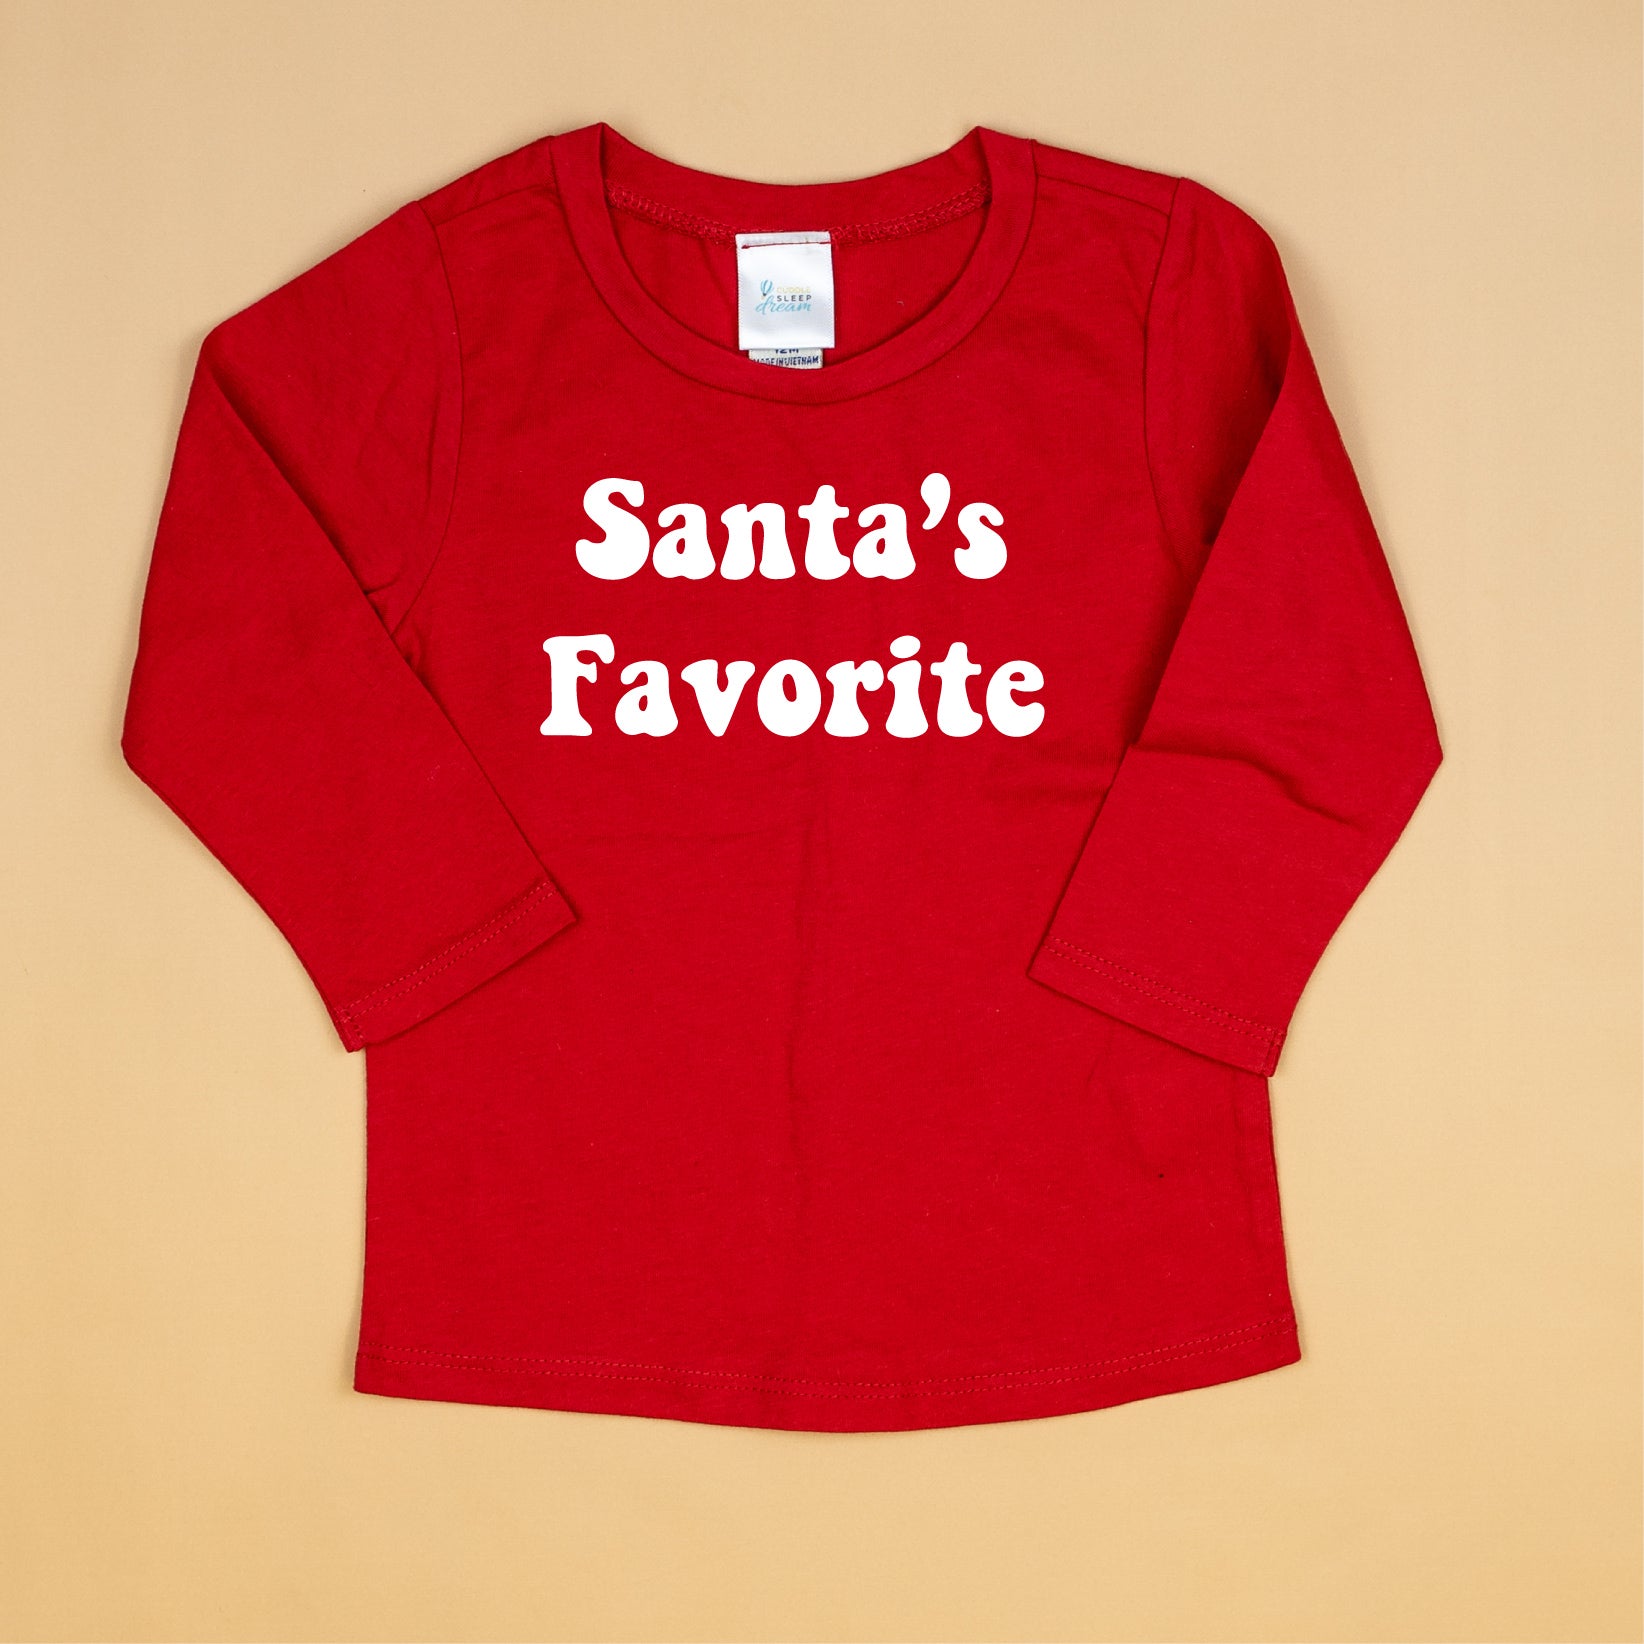 Cuddle Sleep Dream Graphic Tee Santa's Favorite | Infant/Toddler/Youth Tshirt